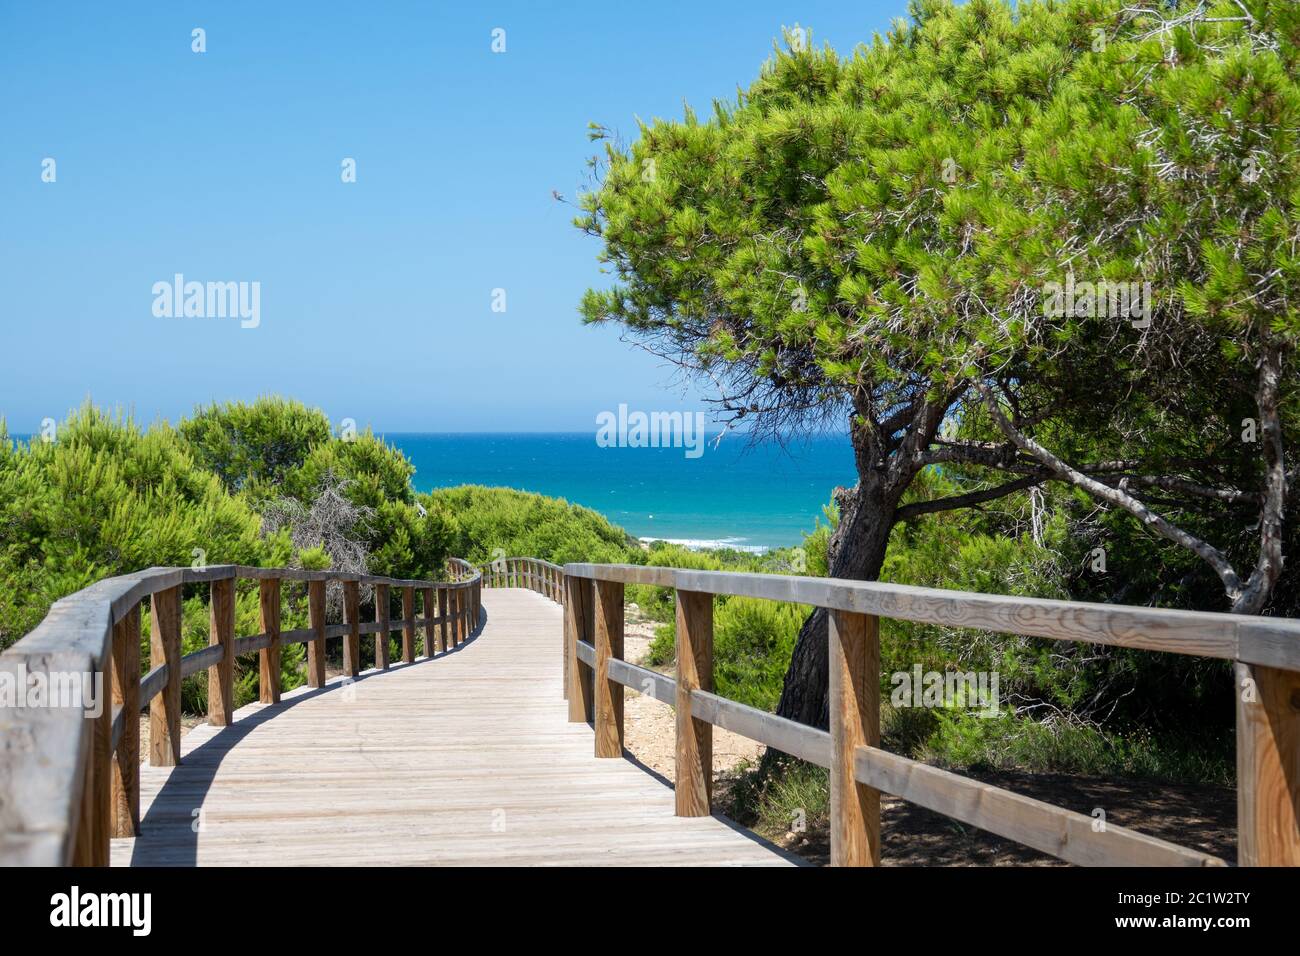 Broadwalk to a sand beach, trees, ocean and blue sky Stock Photo